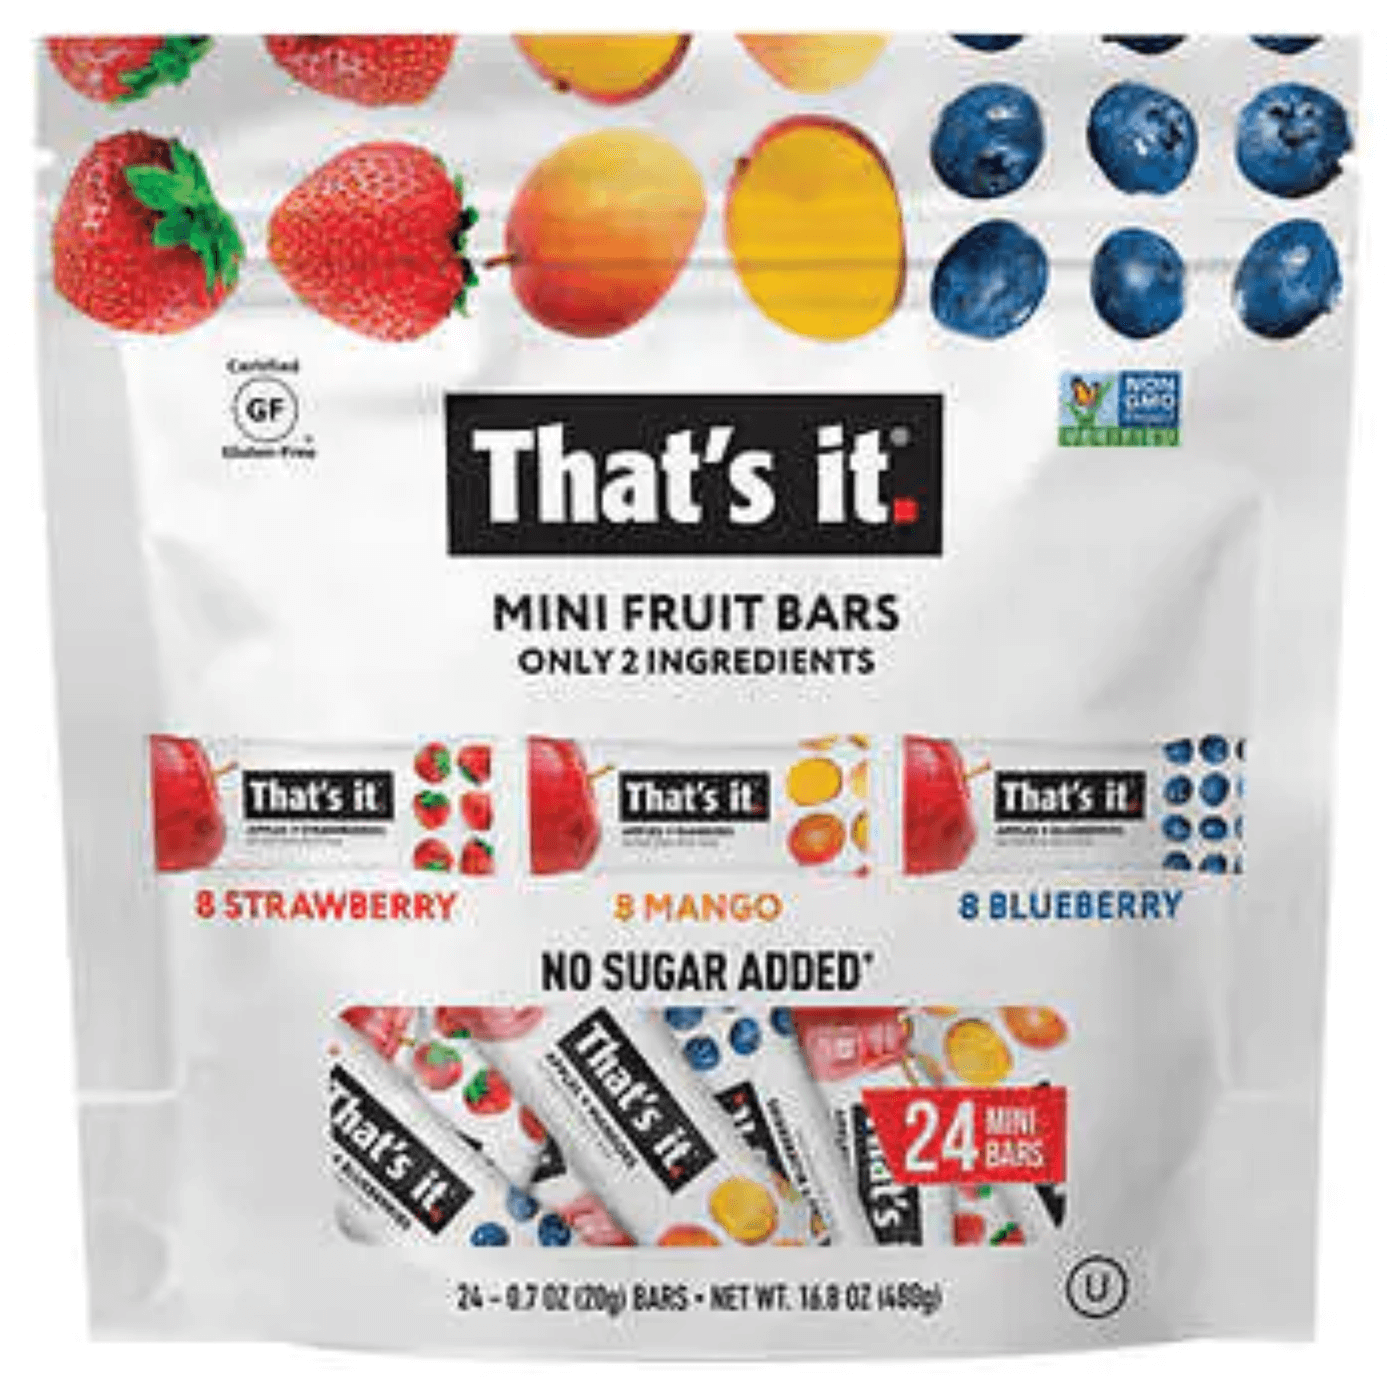 That’s it Fruit Bars